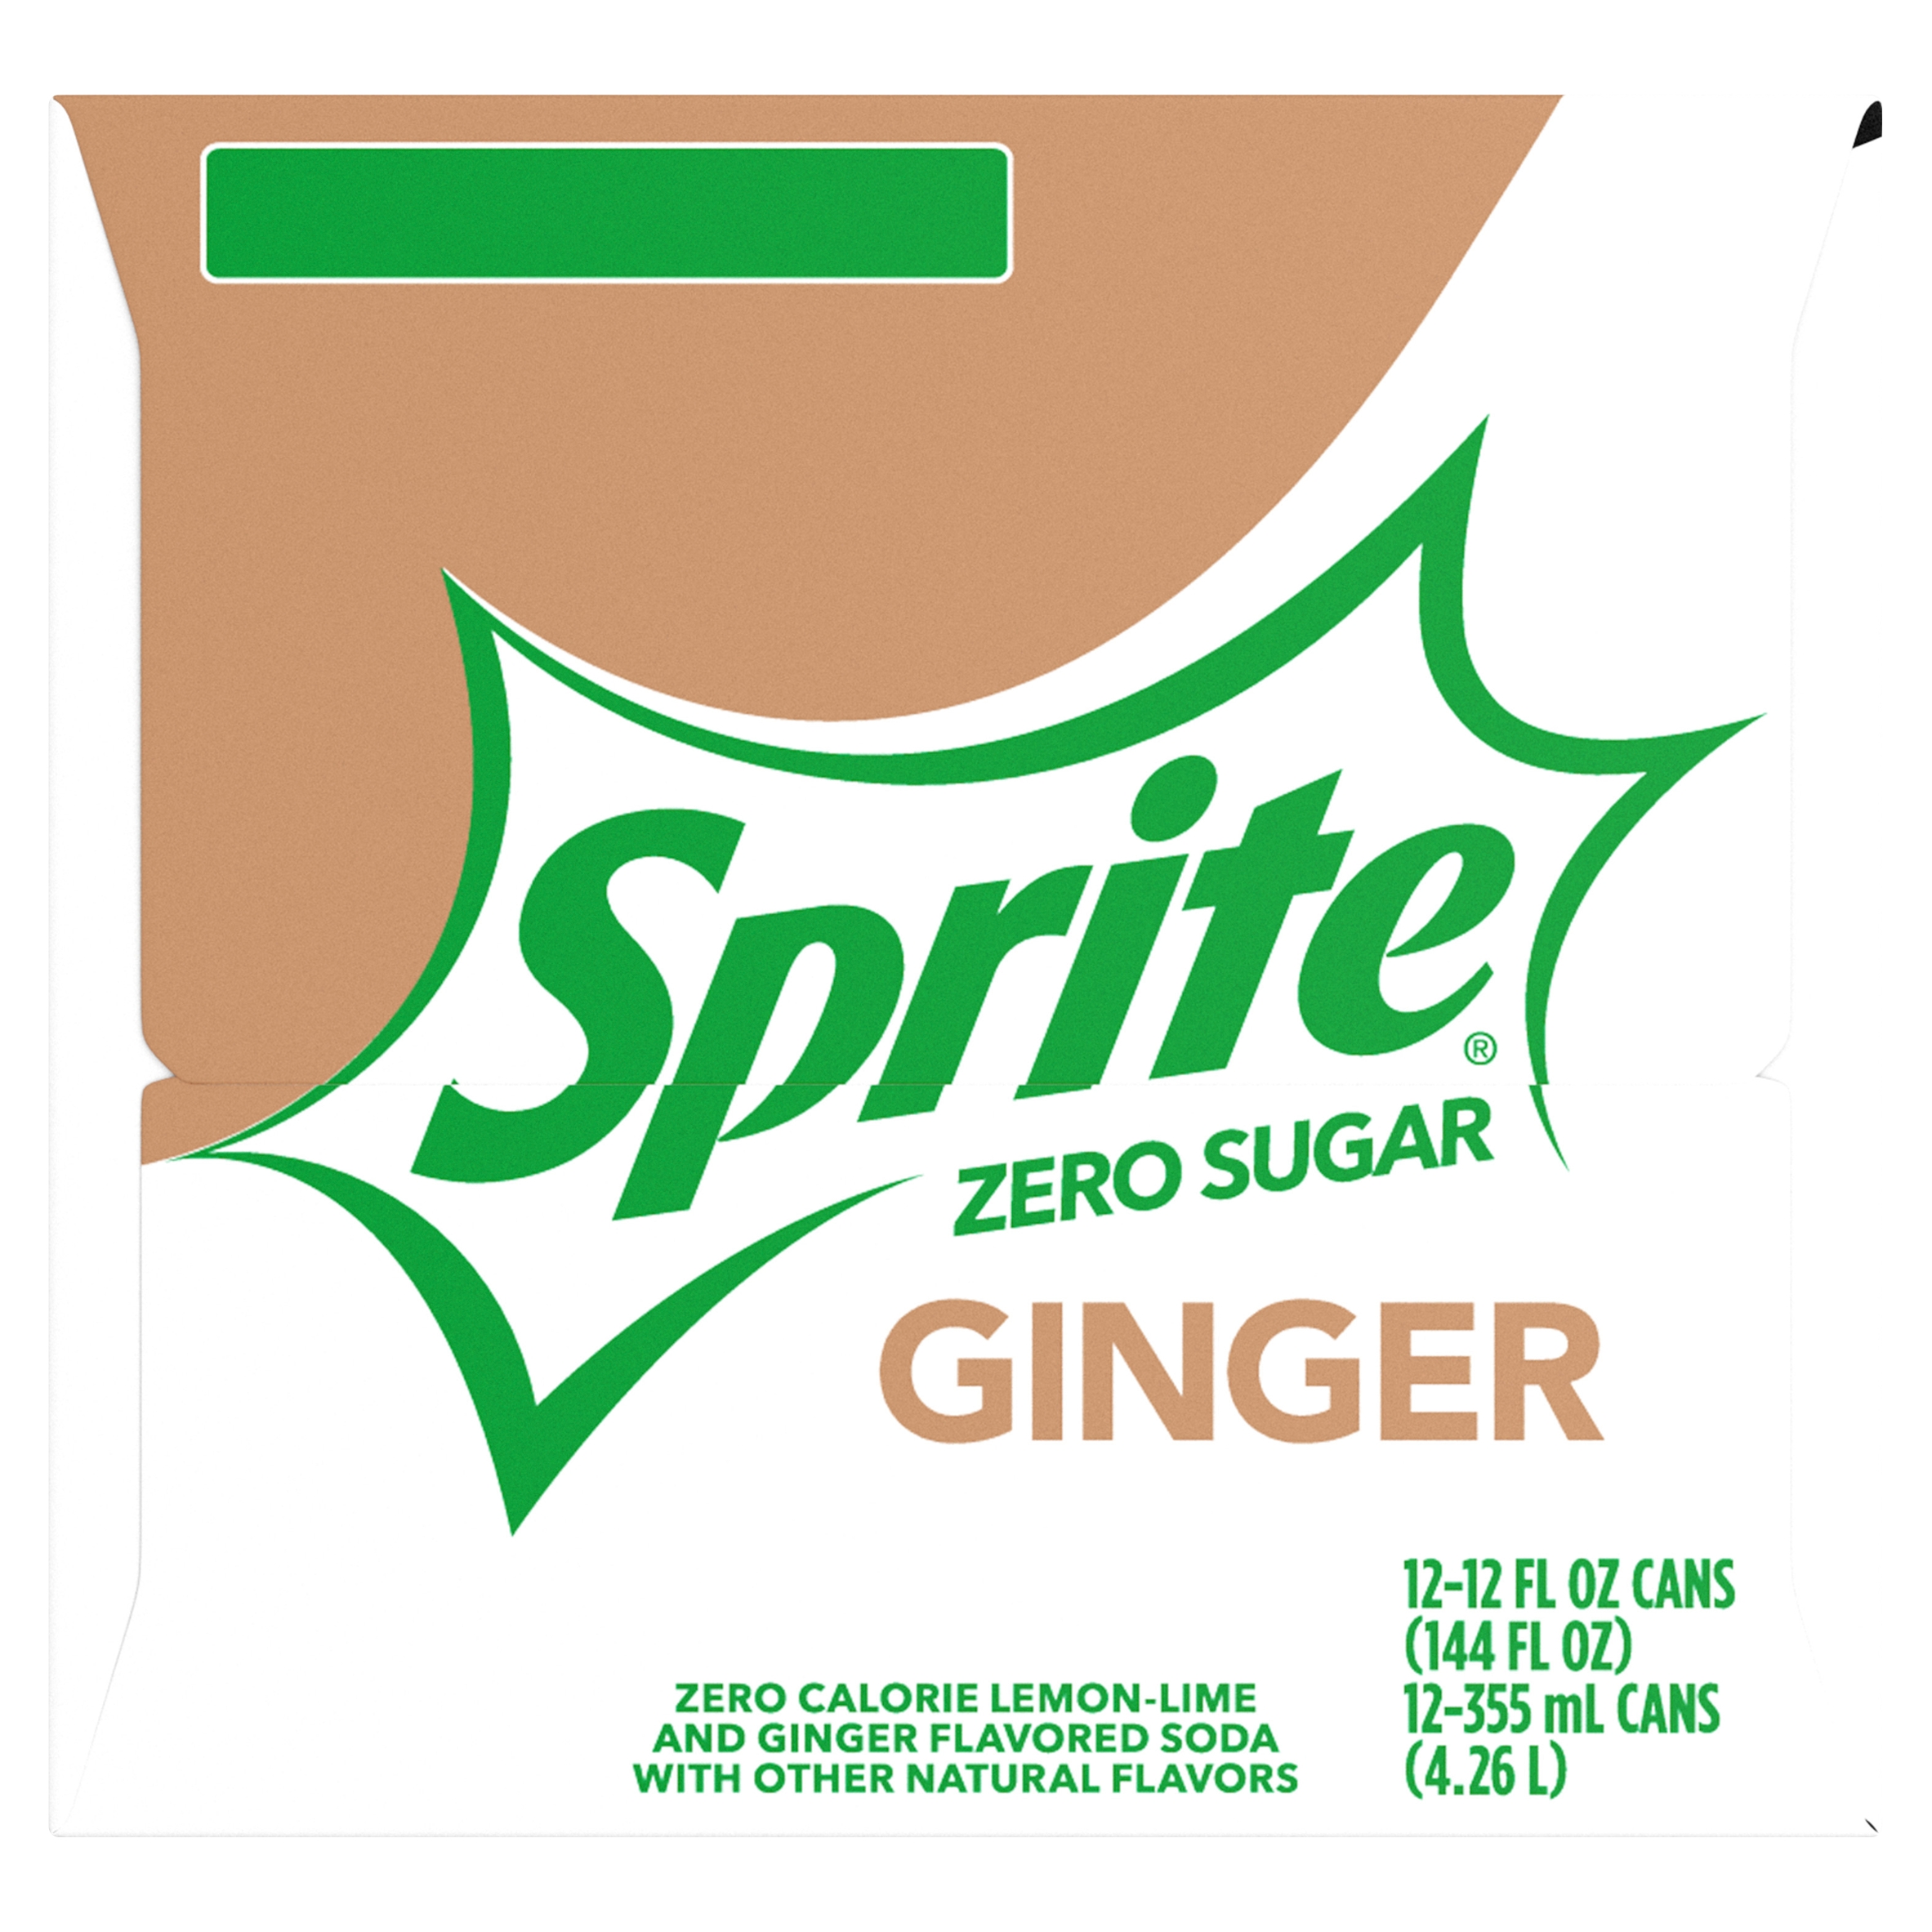 Sprite Ginger Zero Sugar Fridge Pack Cans, 12 fl oz, 12 Pack - image 5 of 8